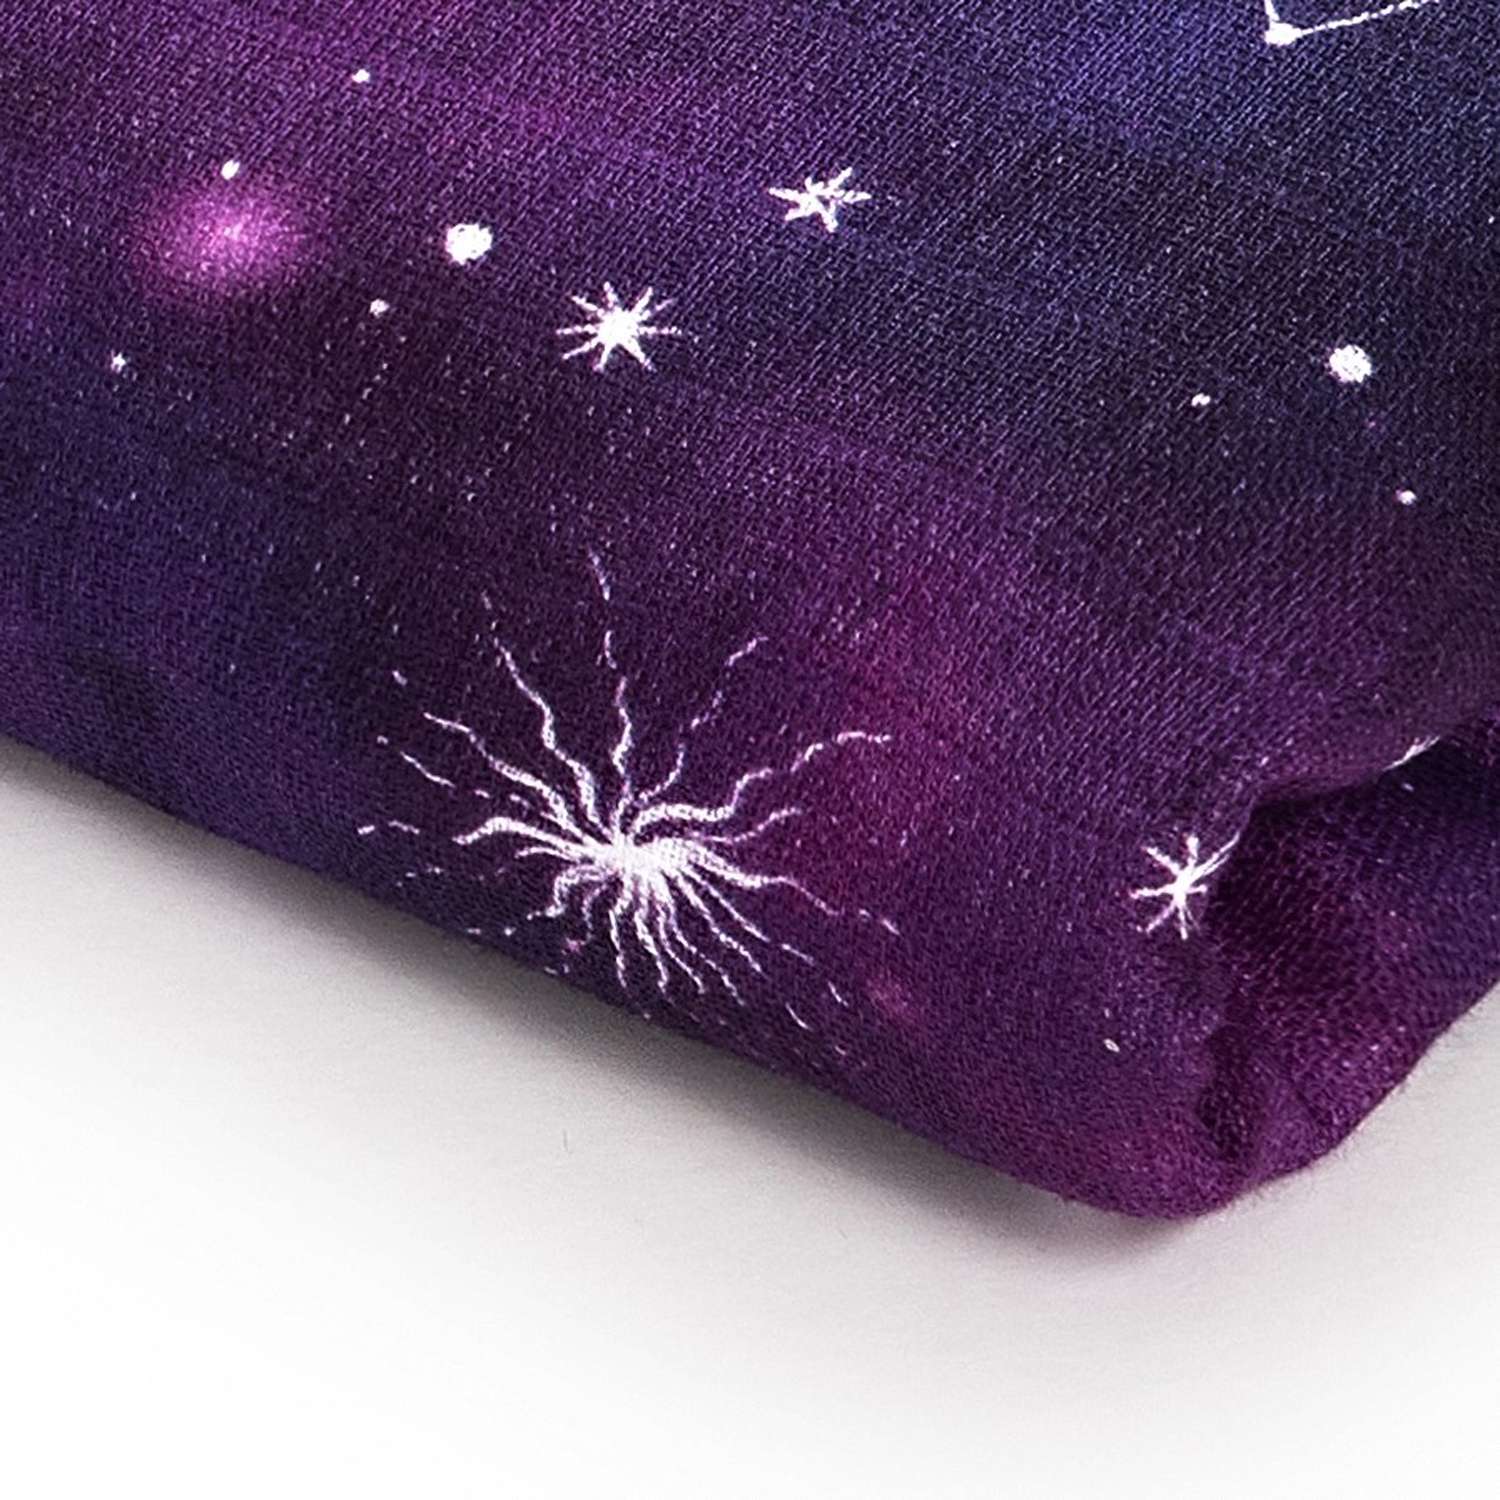 Одеяло-плед Adam Stork муслиновый Galaxy 118x118 см - фото 2